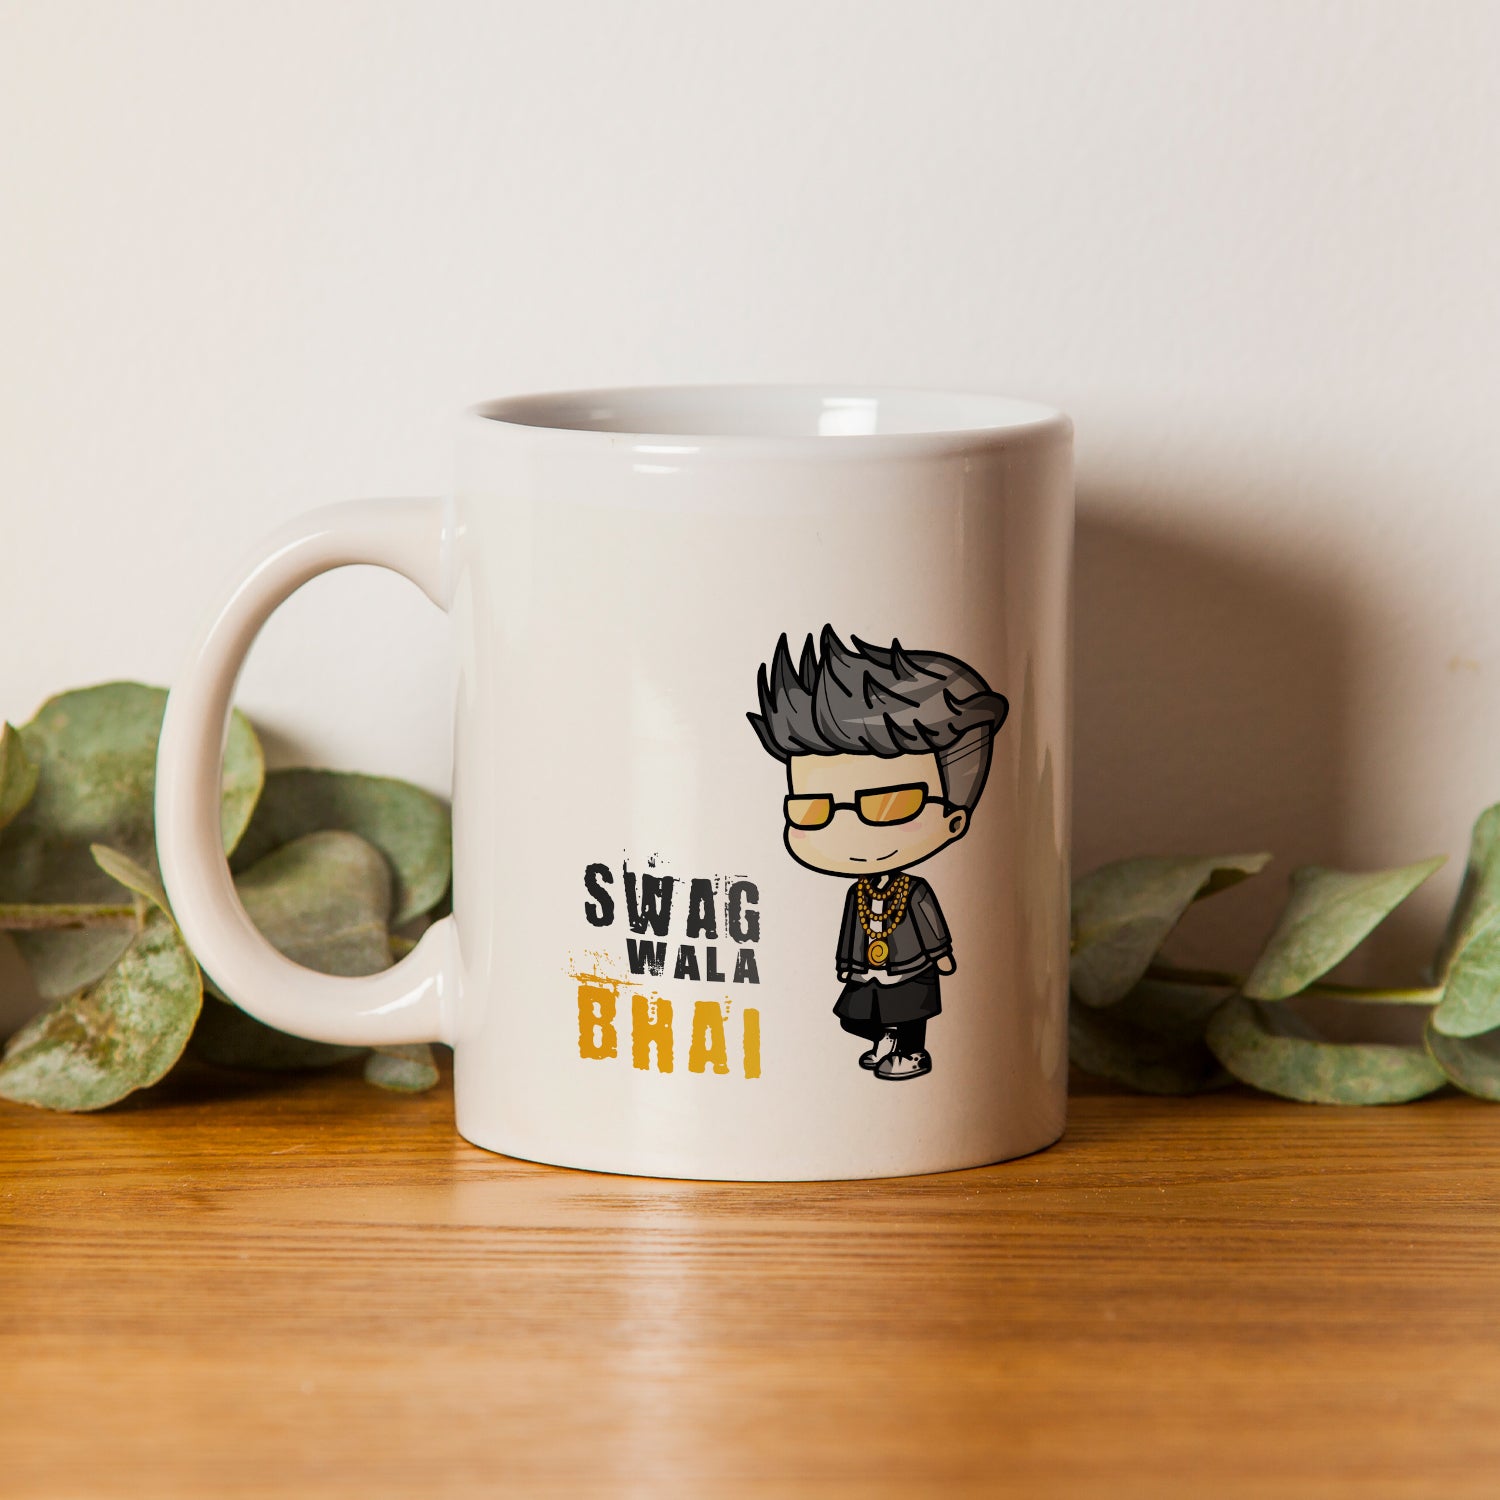 "Swag wala Bhai" Brother Ceramic Coffee/Tea Mug 1